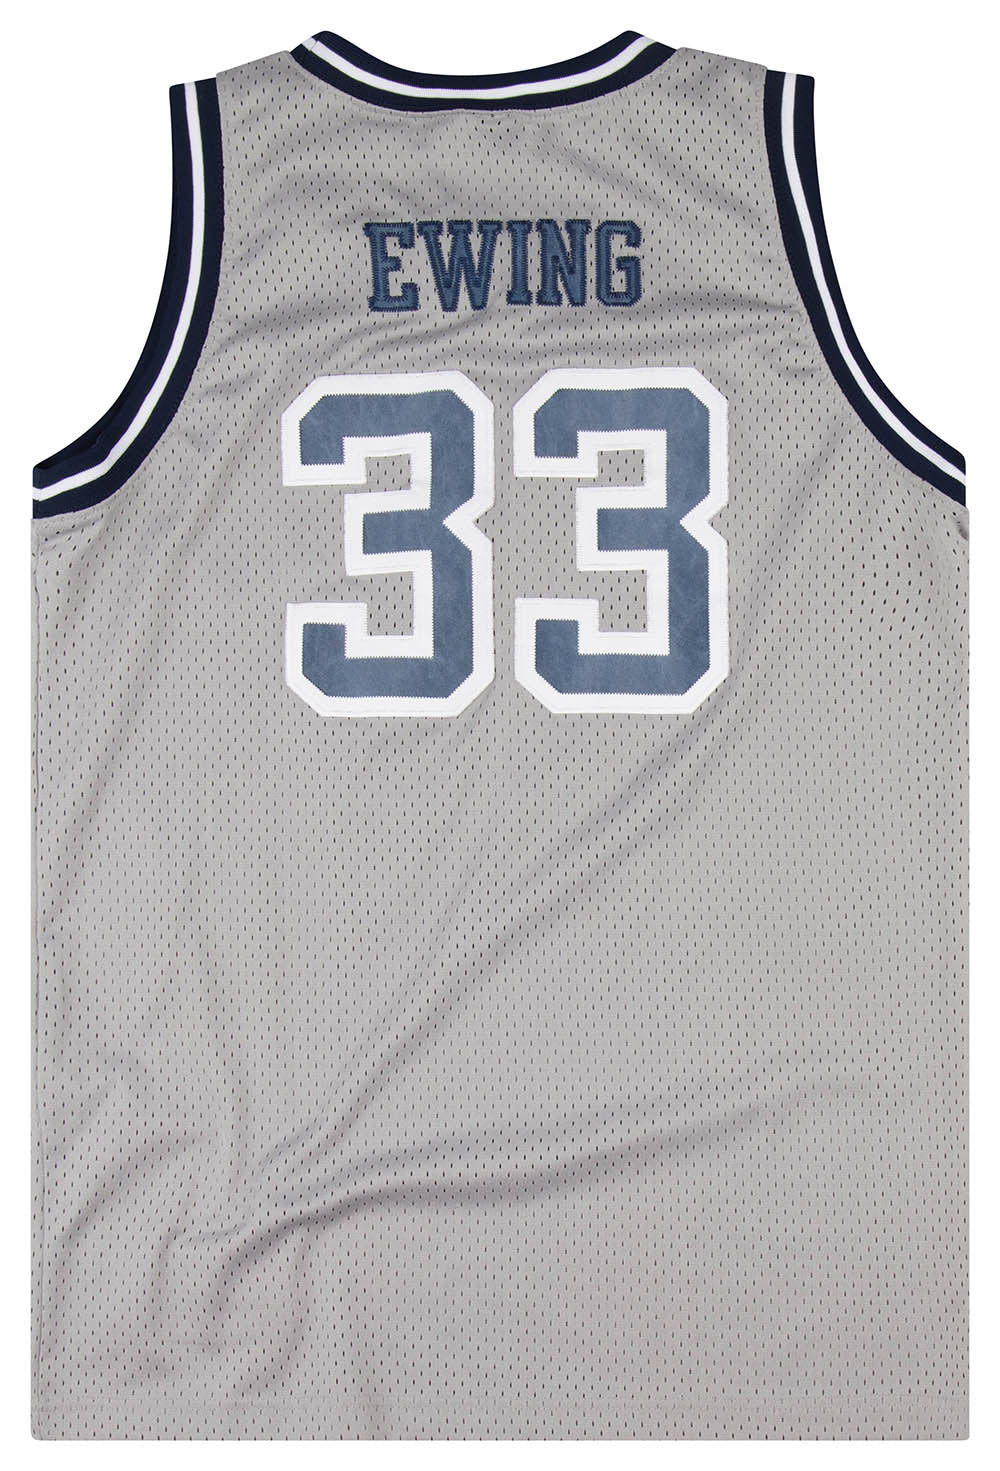 NCAA Basketball Jersey Georgetown Hoyas Gray #33 Patrick Ewing